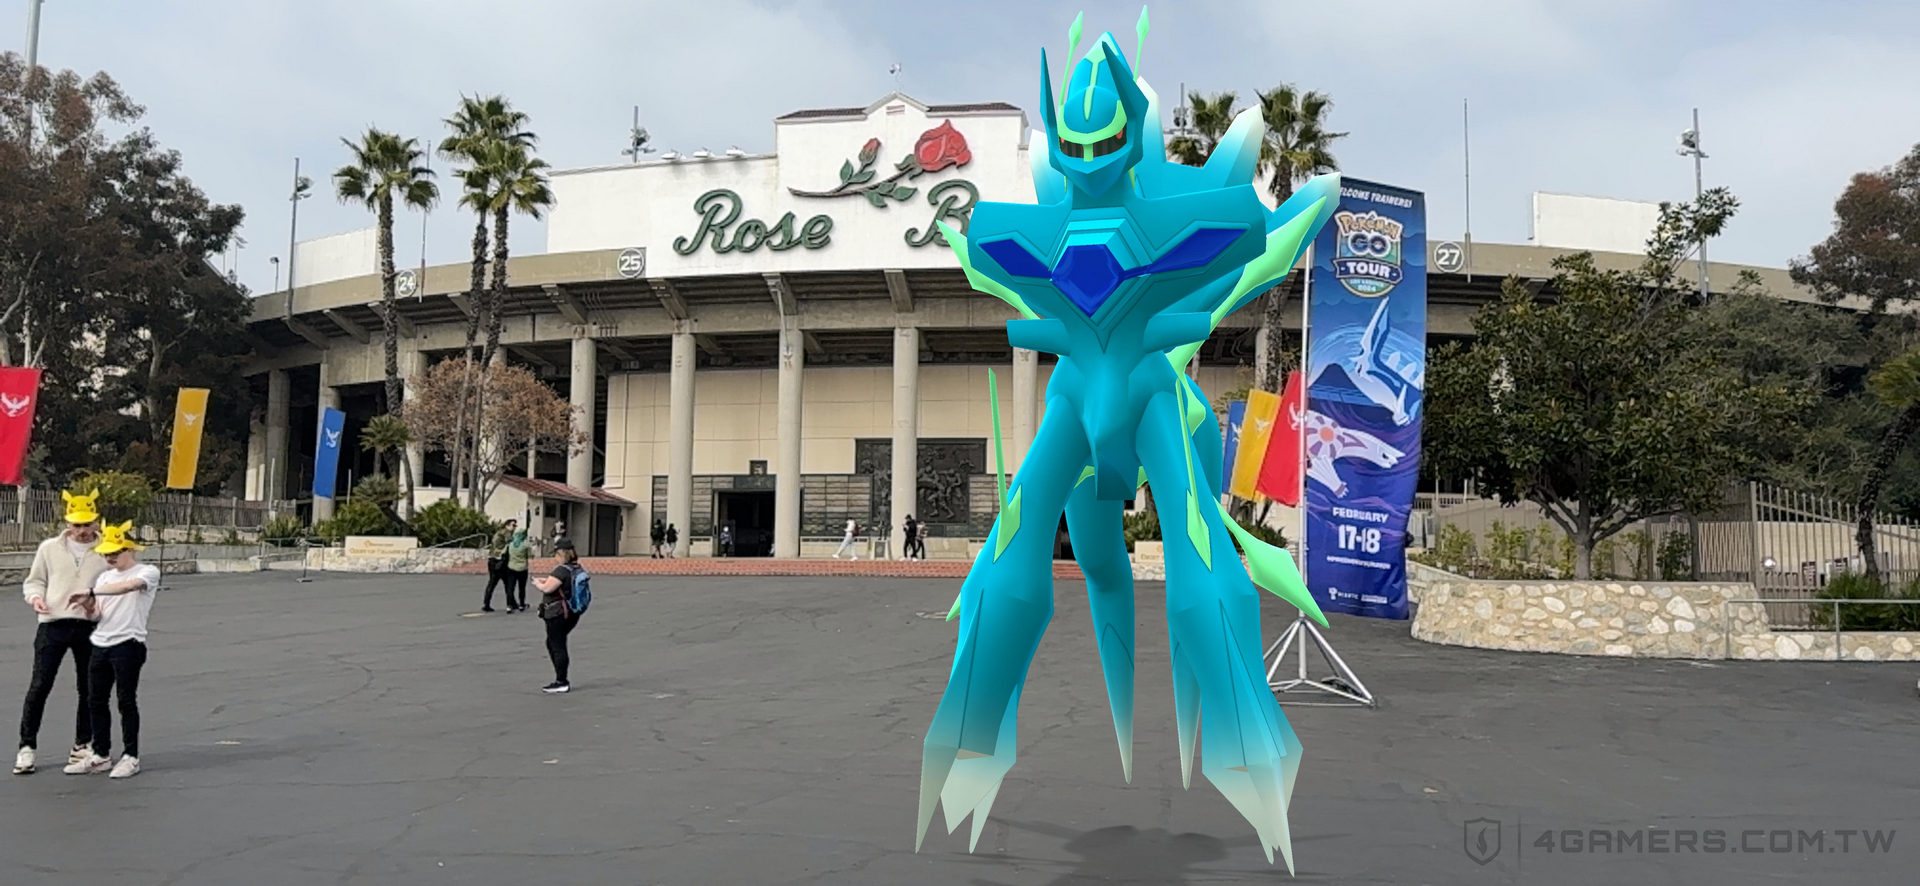 Pokémon GO Tour: 神奧 - Los Angeles